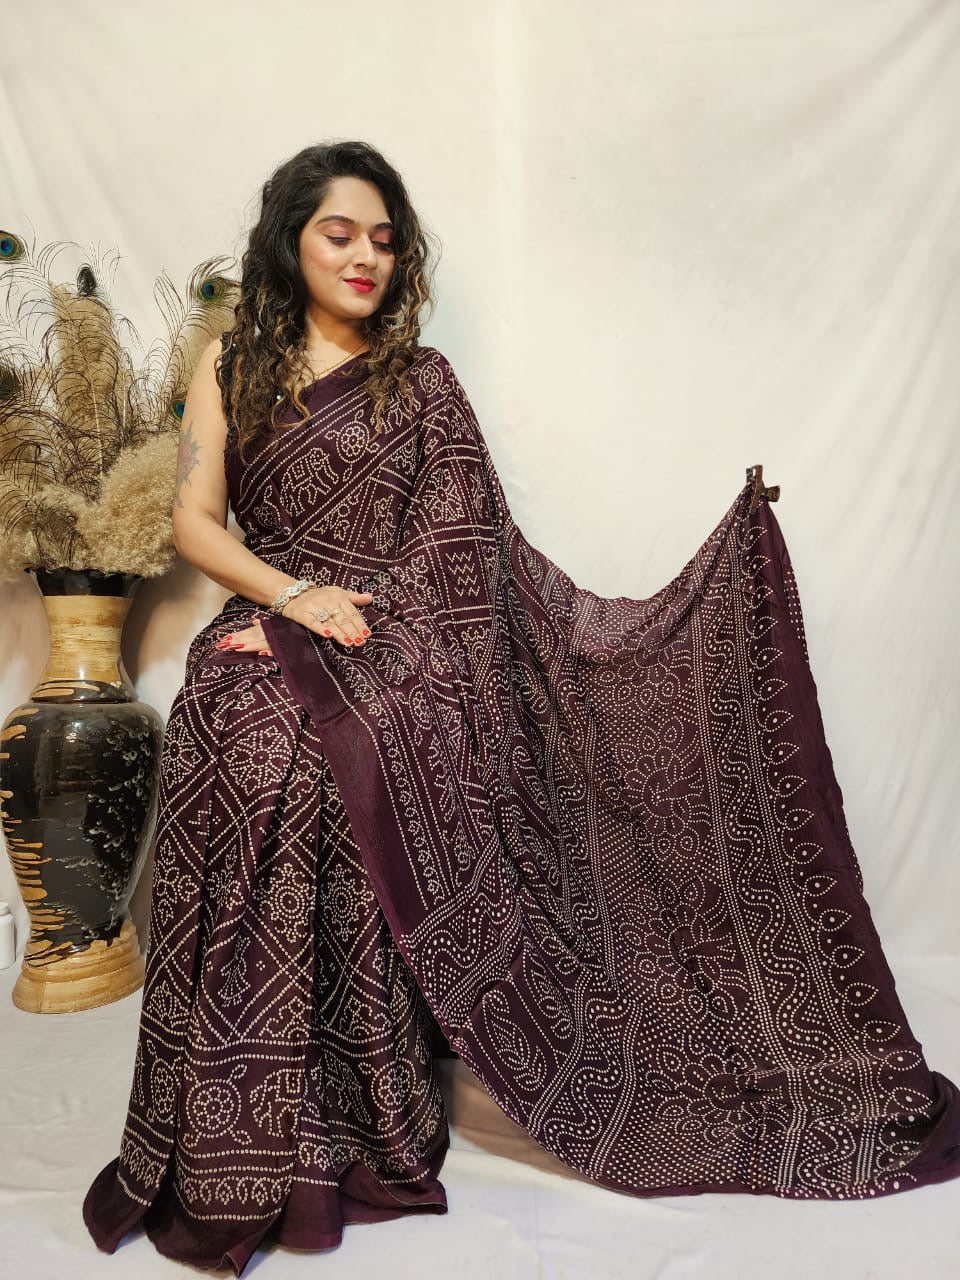 Modal Silk Bandhani Print Saree - Premium  from Ethenika.com  - Just INR 3490! Shop now at Ethenika.com 